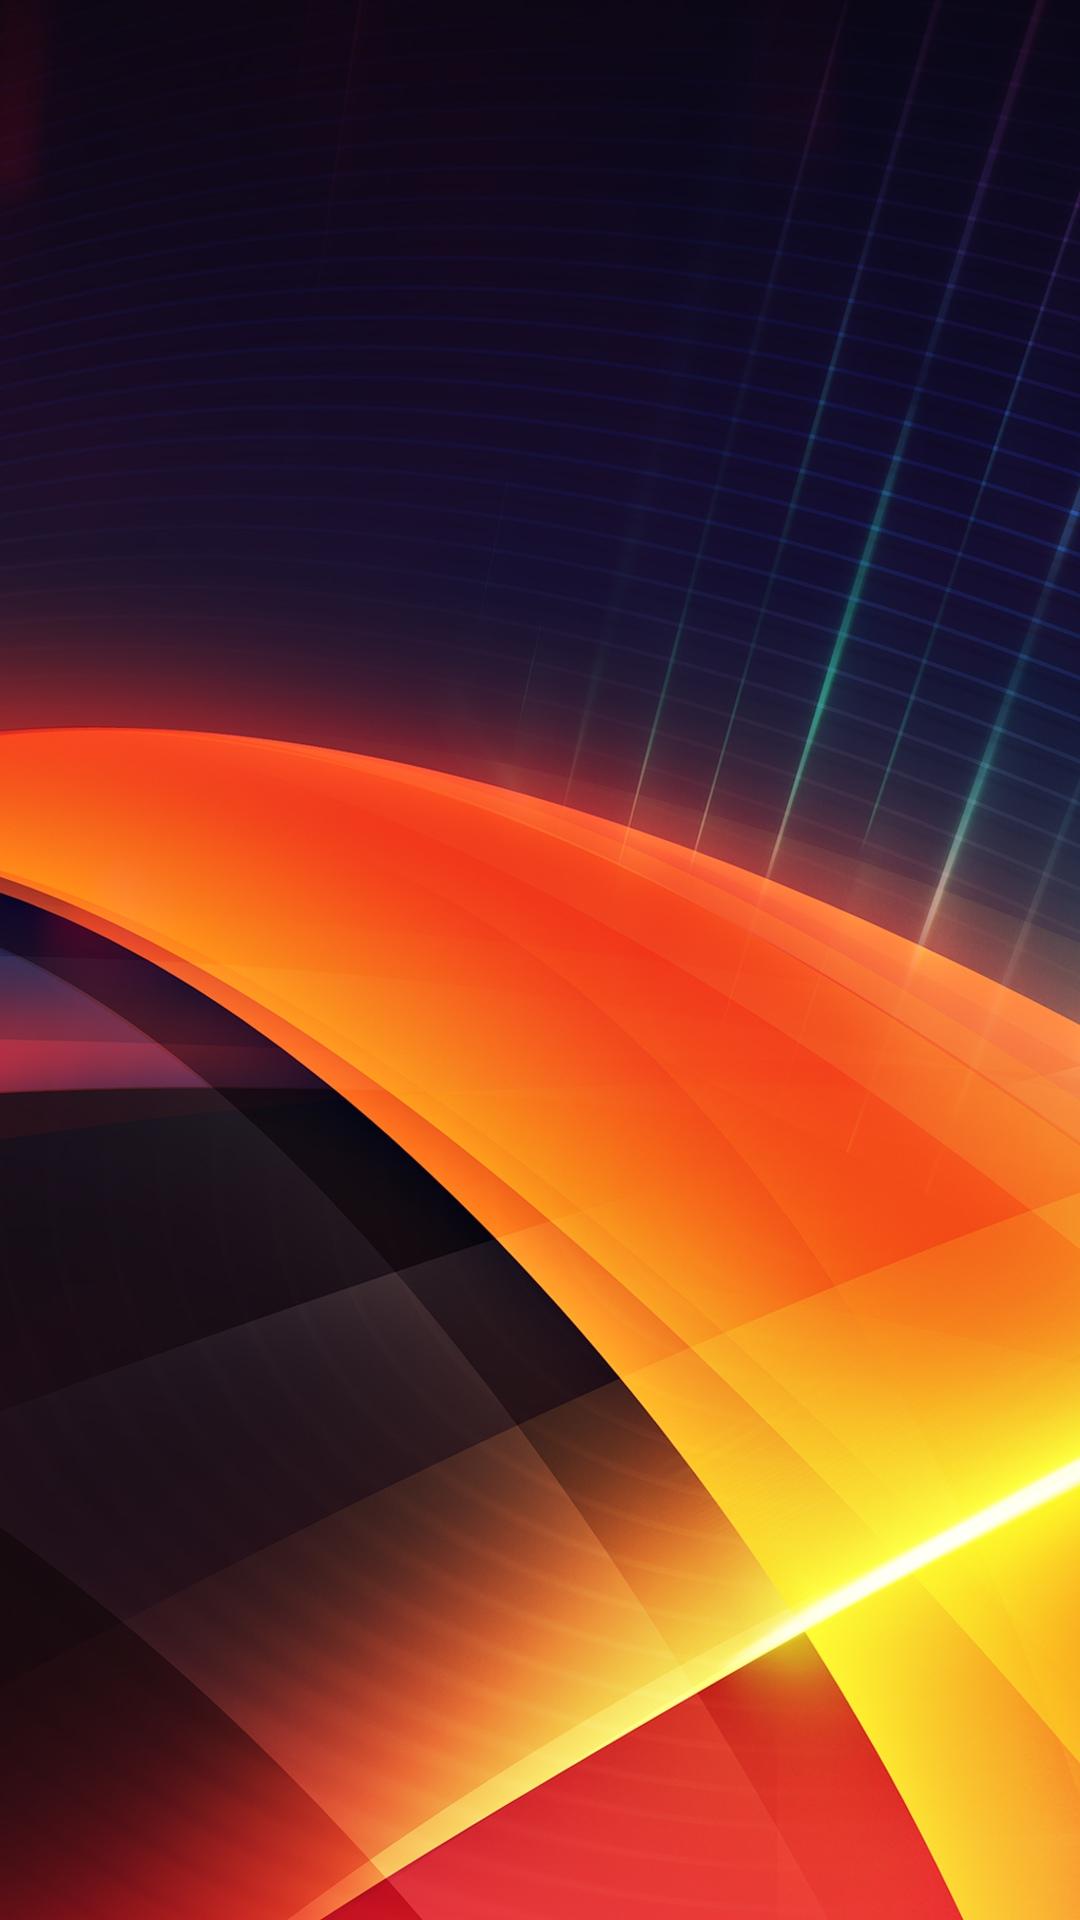 Futuristic Orange Layers Illustration iPhone 6 Plus HD Wallpaper